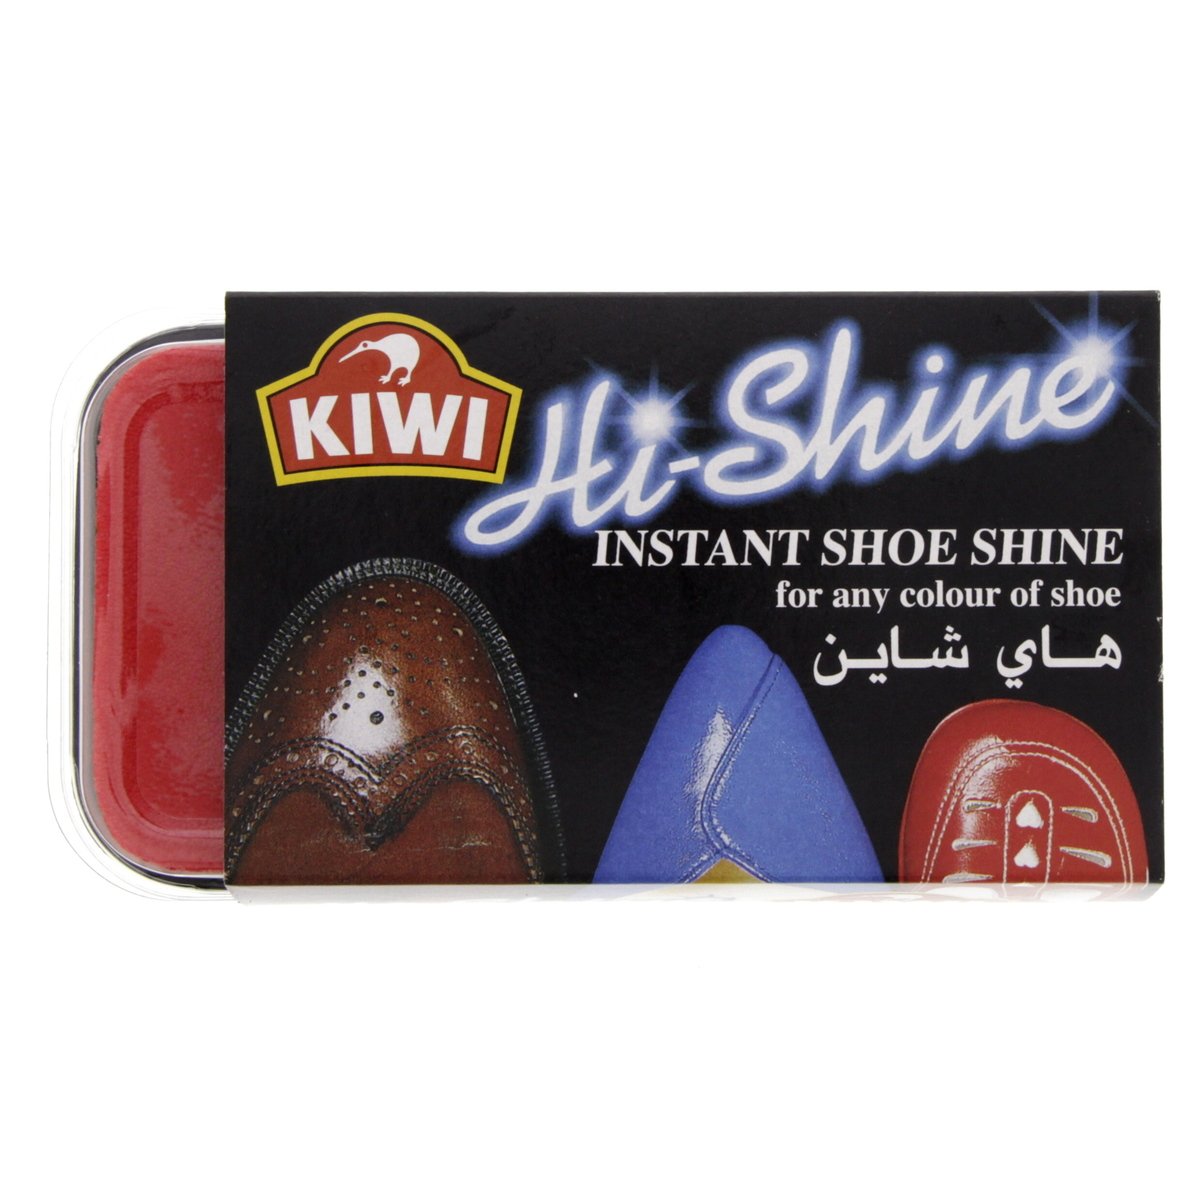 Kiwi Hi Shine Instant Shoe Shine For Any Colour Of Shoe 1 Pc